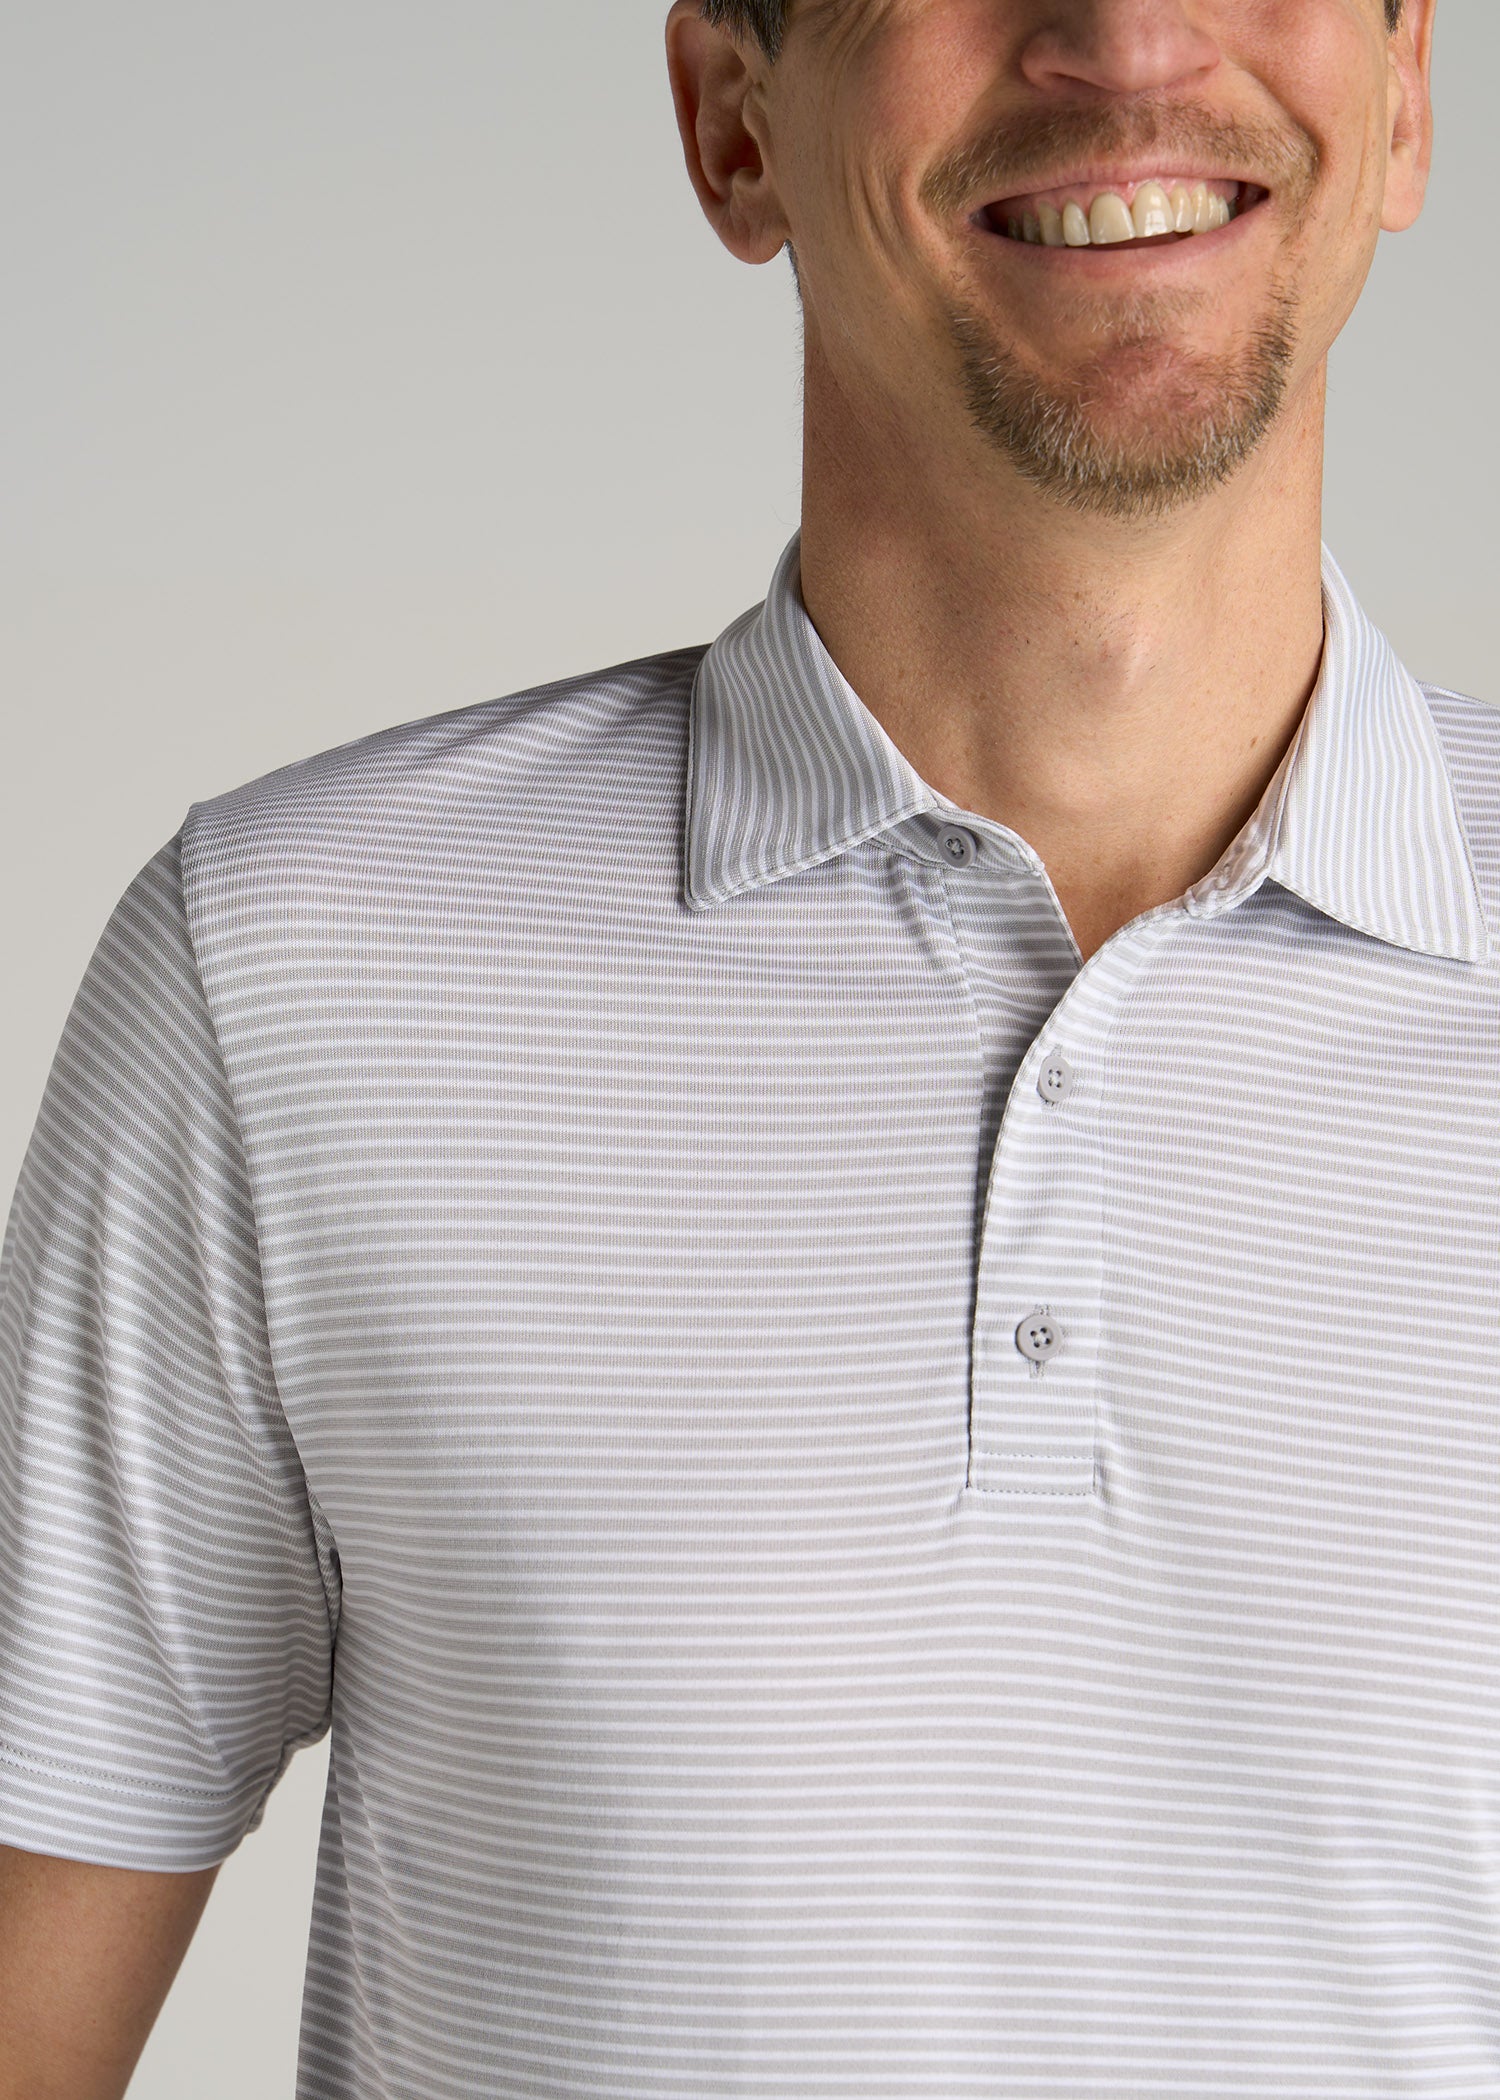 The long sleeve polo shirt ultimate grey - The Nines